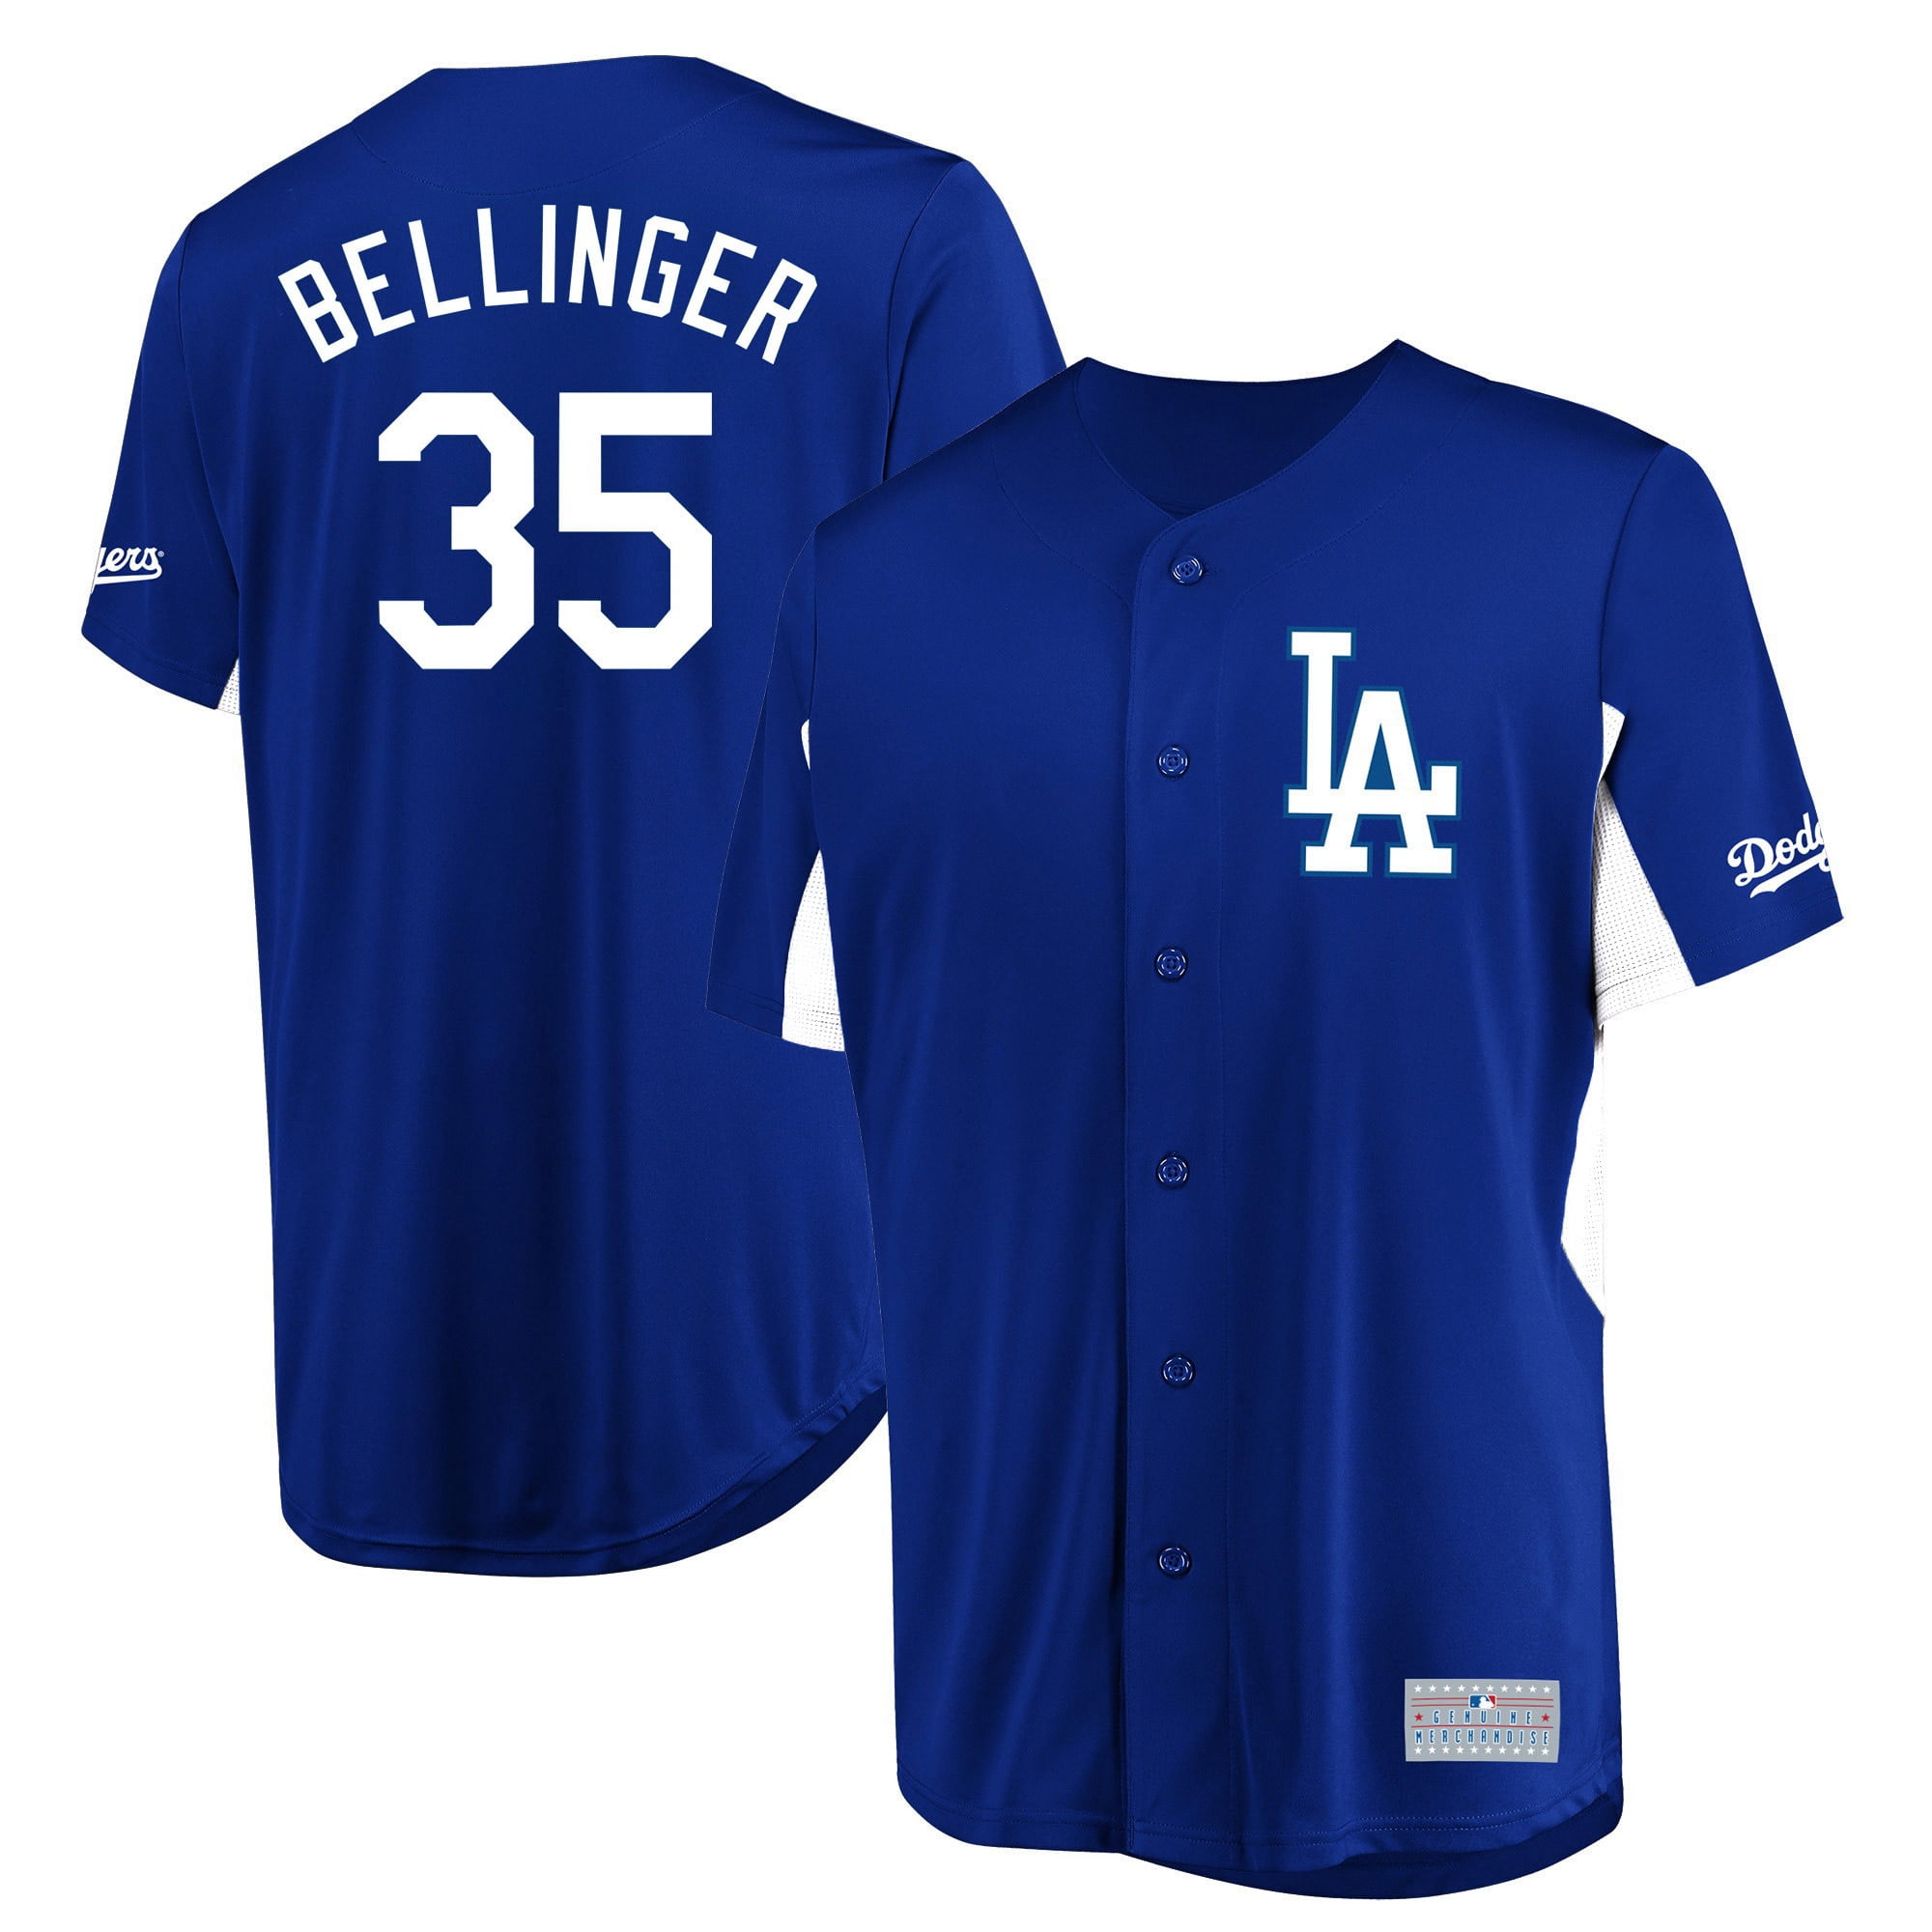 Cody Bellinger Los Angeles Dodgers Majestic MLB Jersey - Royal - Walmart.com - Walmart.com